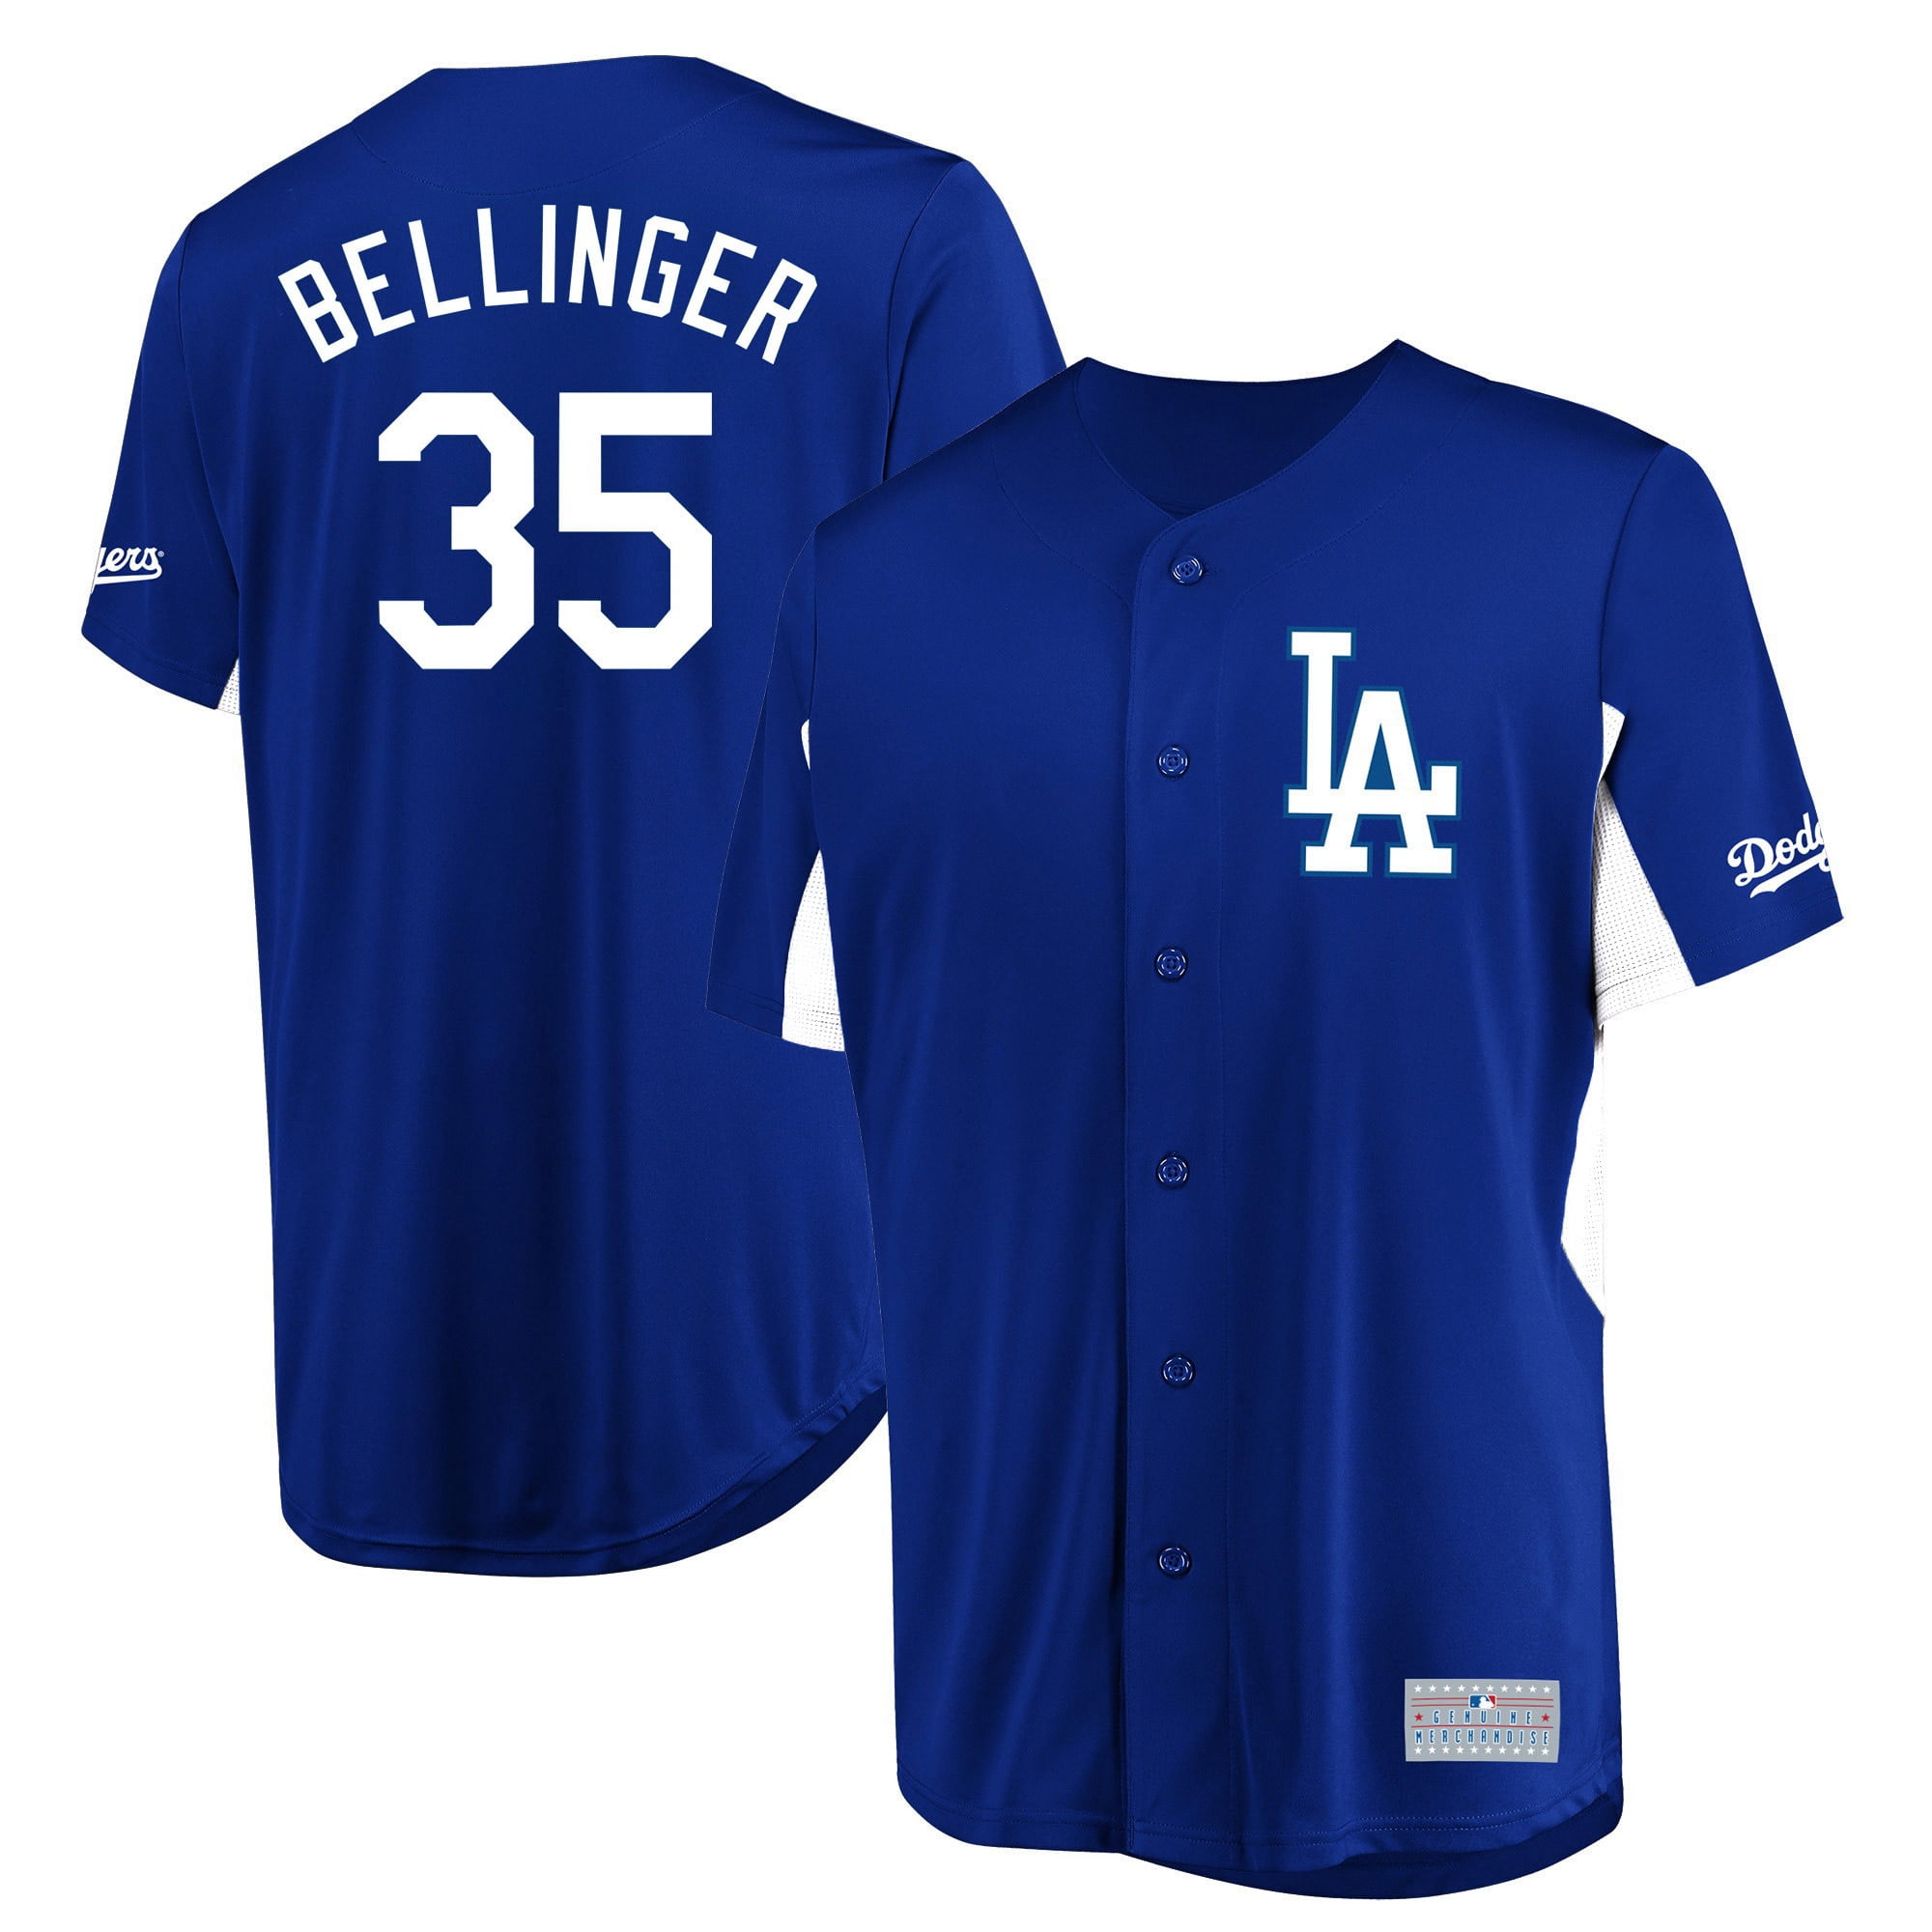 Cody Bellinger Los Angeles Dodgers Majestic MLB Jersey - Royal - Walmart.com - Walmart.com